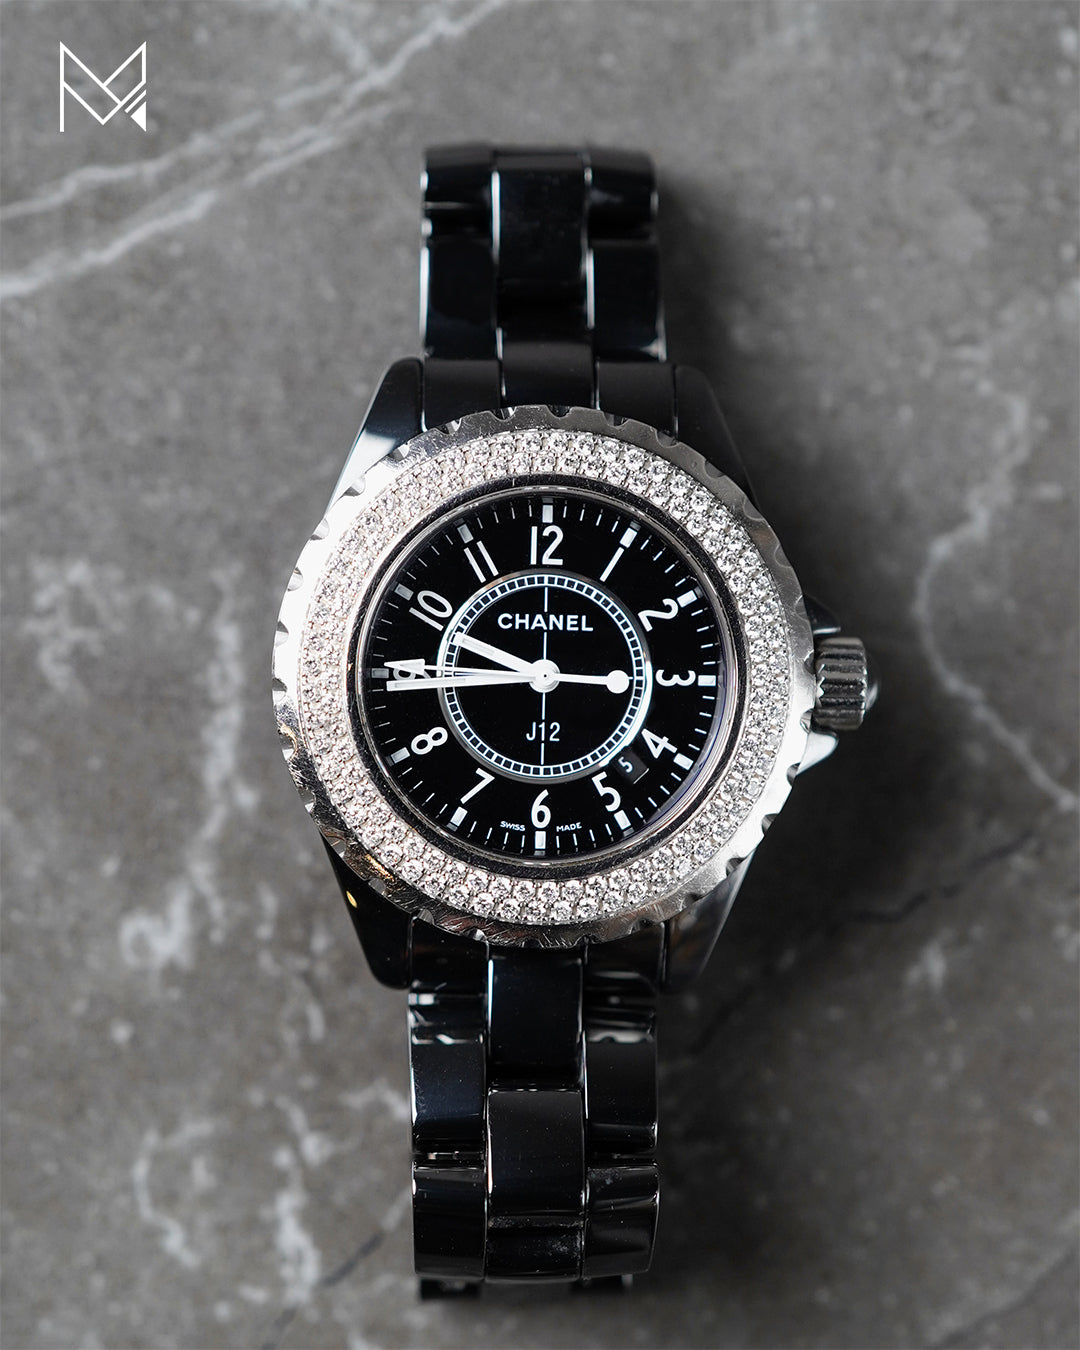 Chanel J12 Black Cereamic 33mm Quartz Diamond Watch Pre-Owned